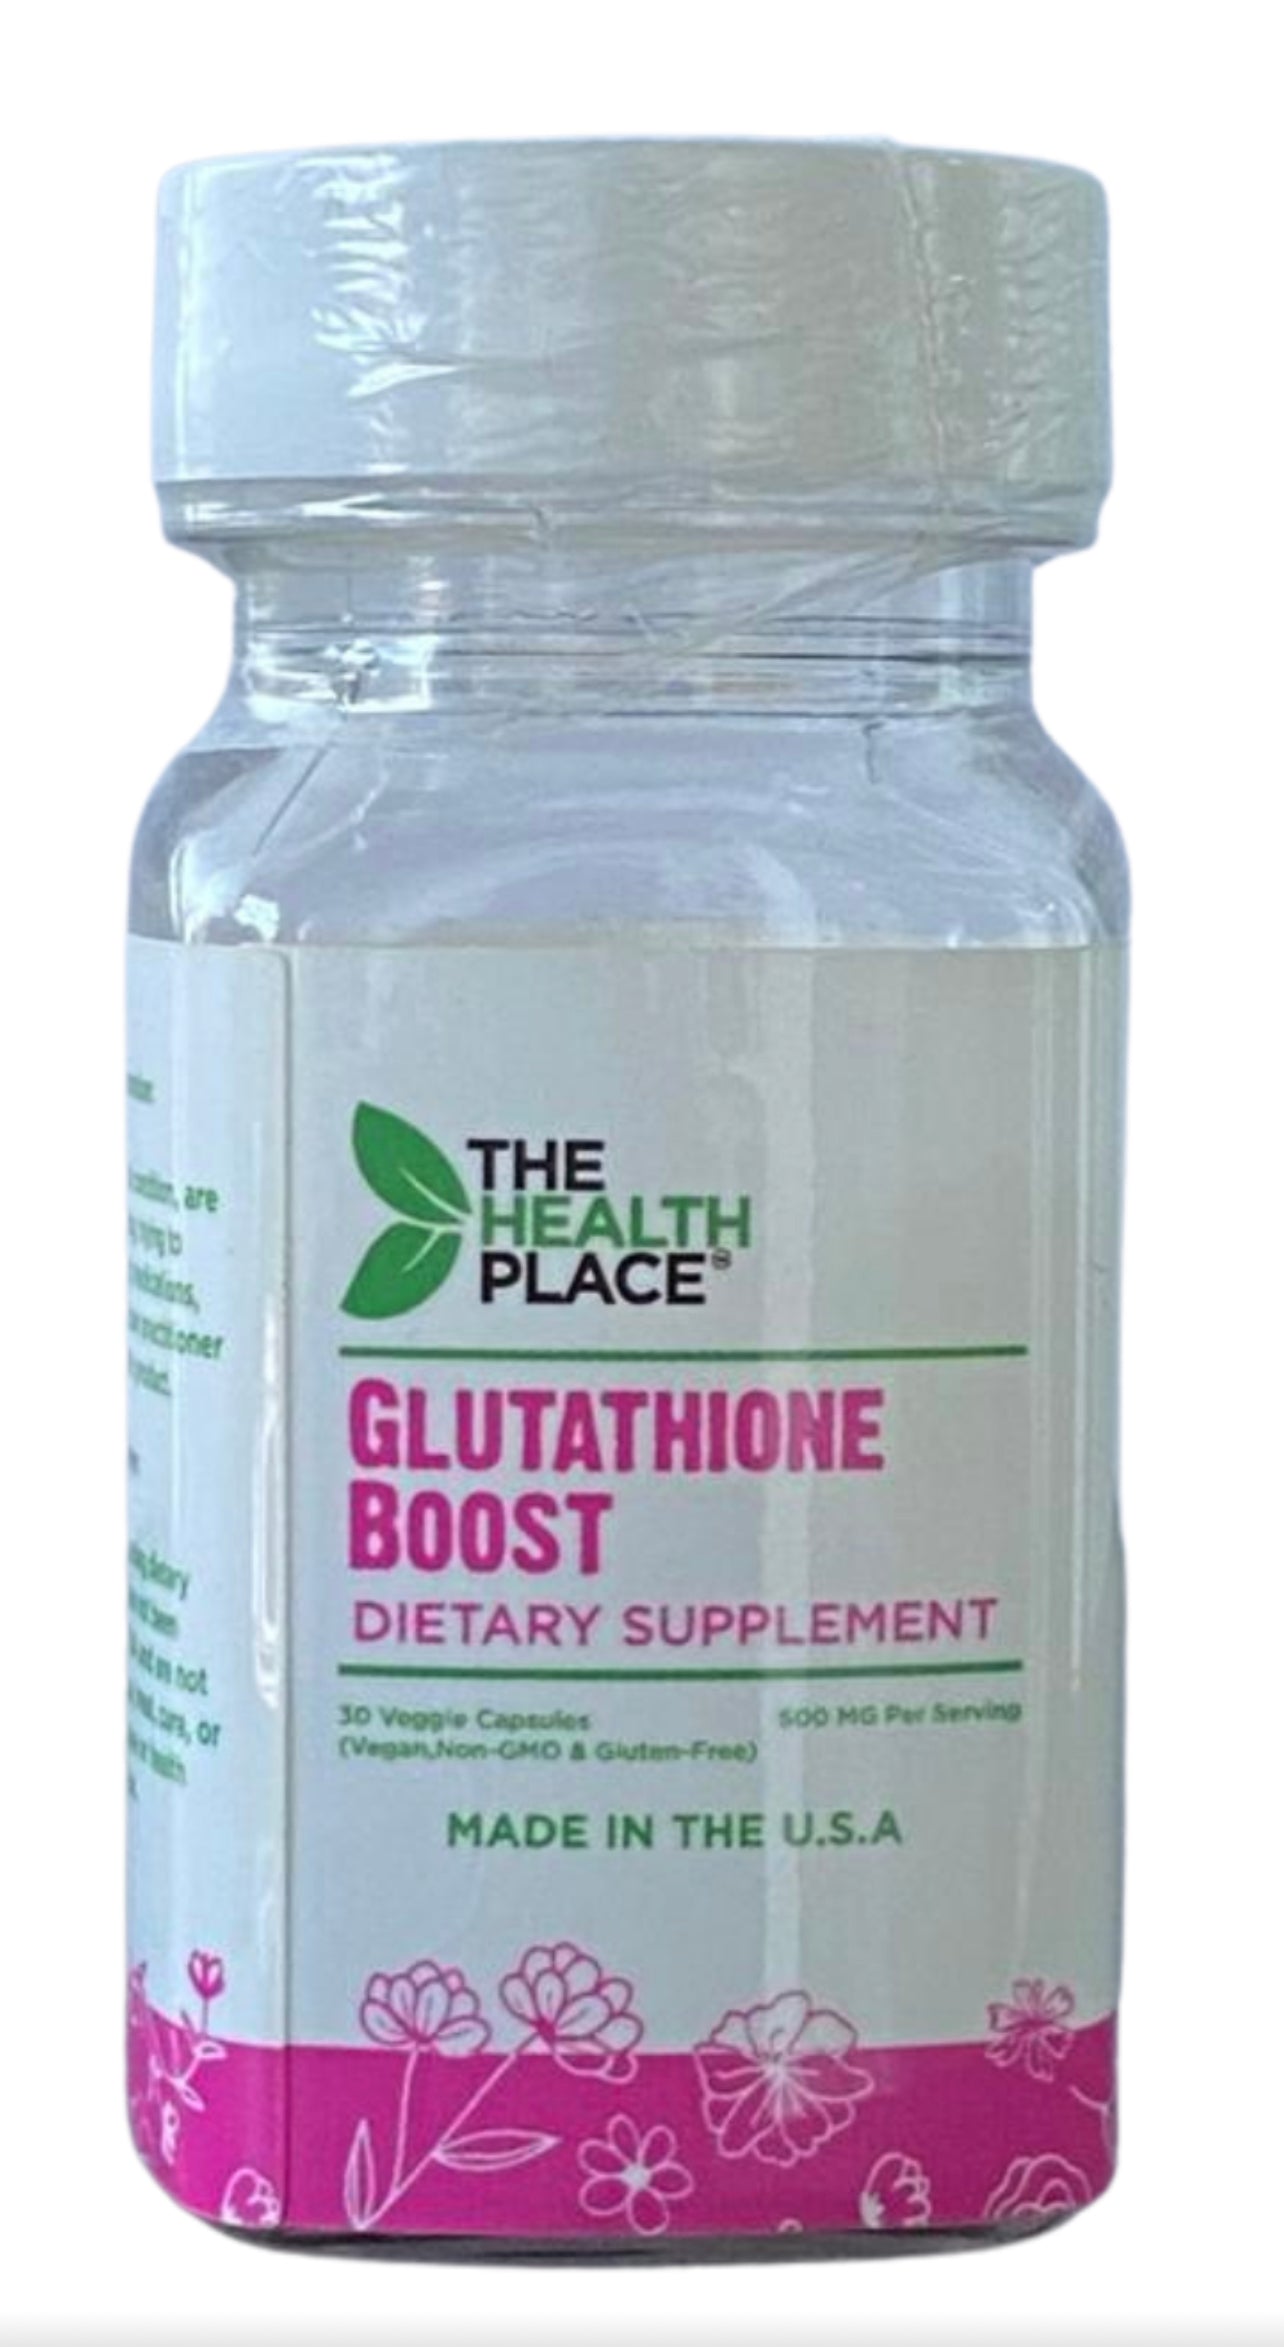 Glutathione Boost - 30 Capsules 650mg each *REFILL PLEASE READ